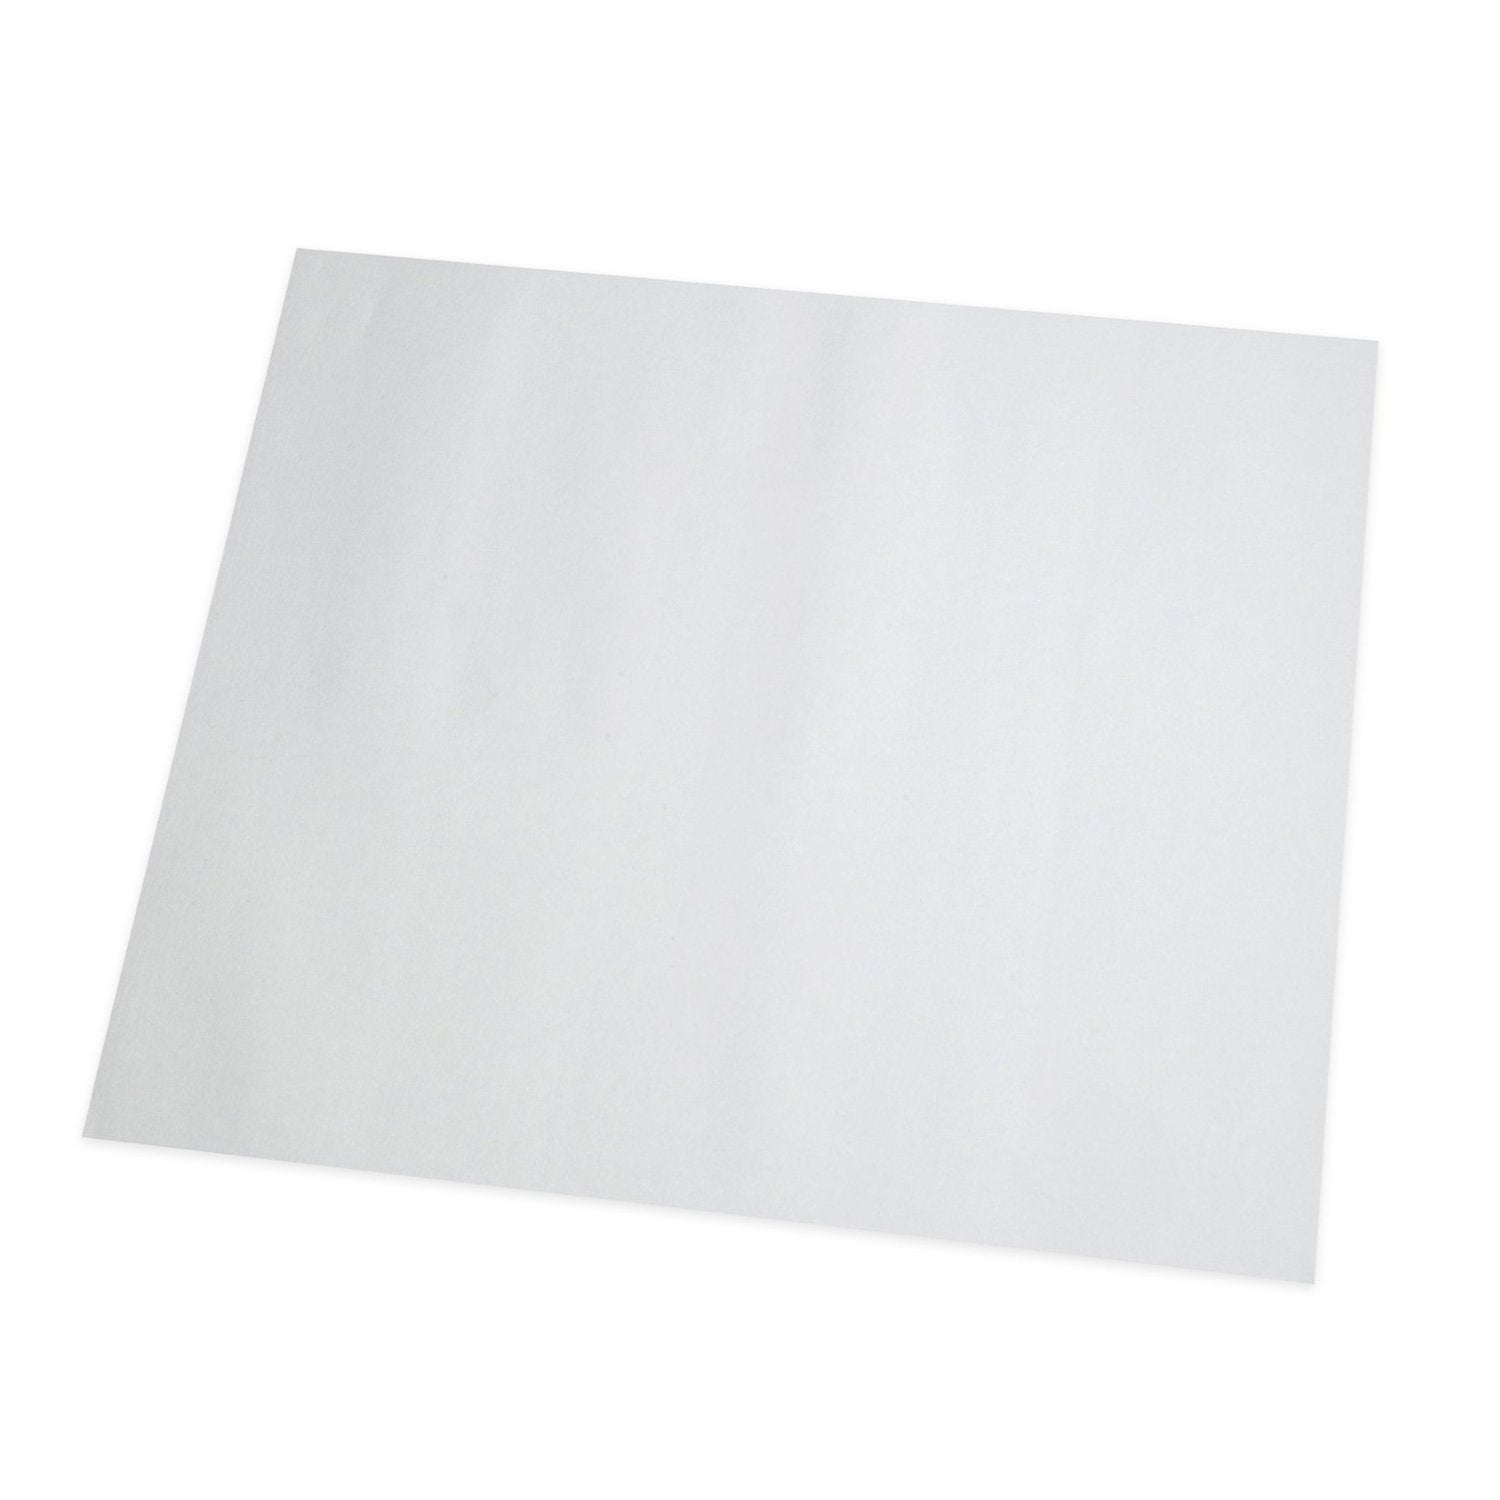 Whatman 1002-917 Filter Sheets, 460 x 570mm, Grade 2, 100/pk (PN:1002-917)